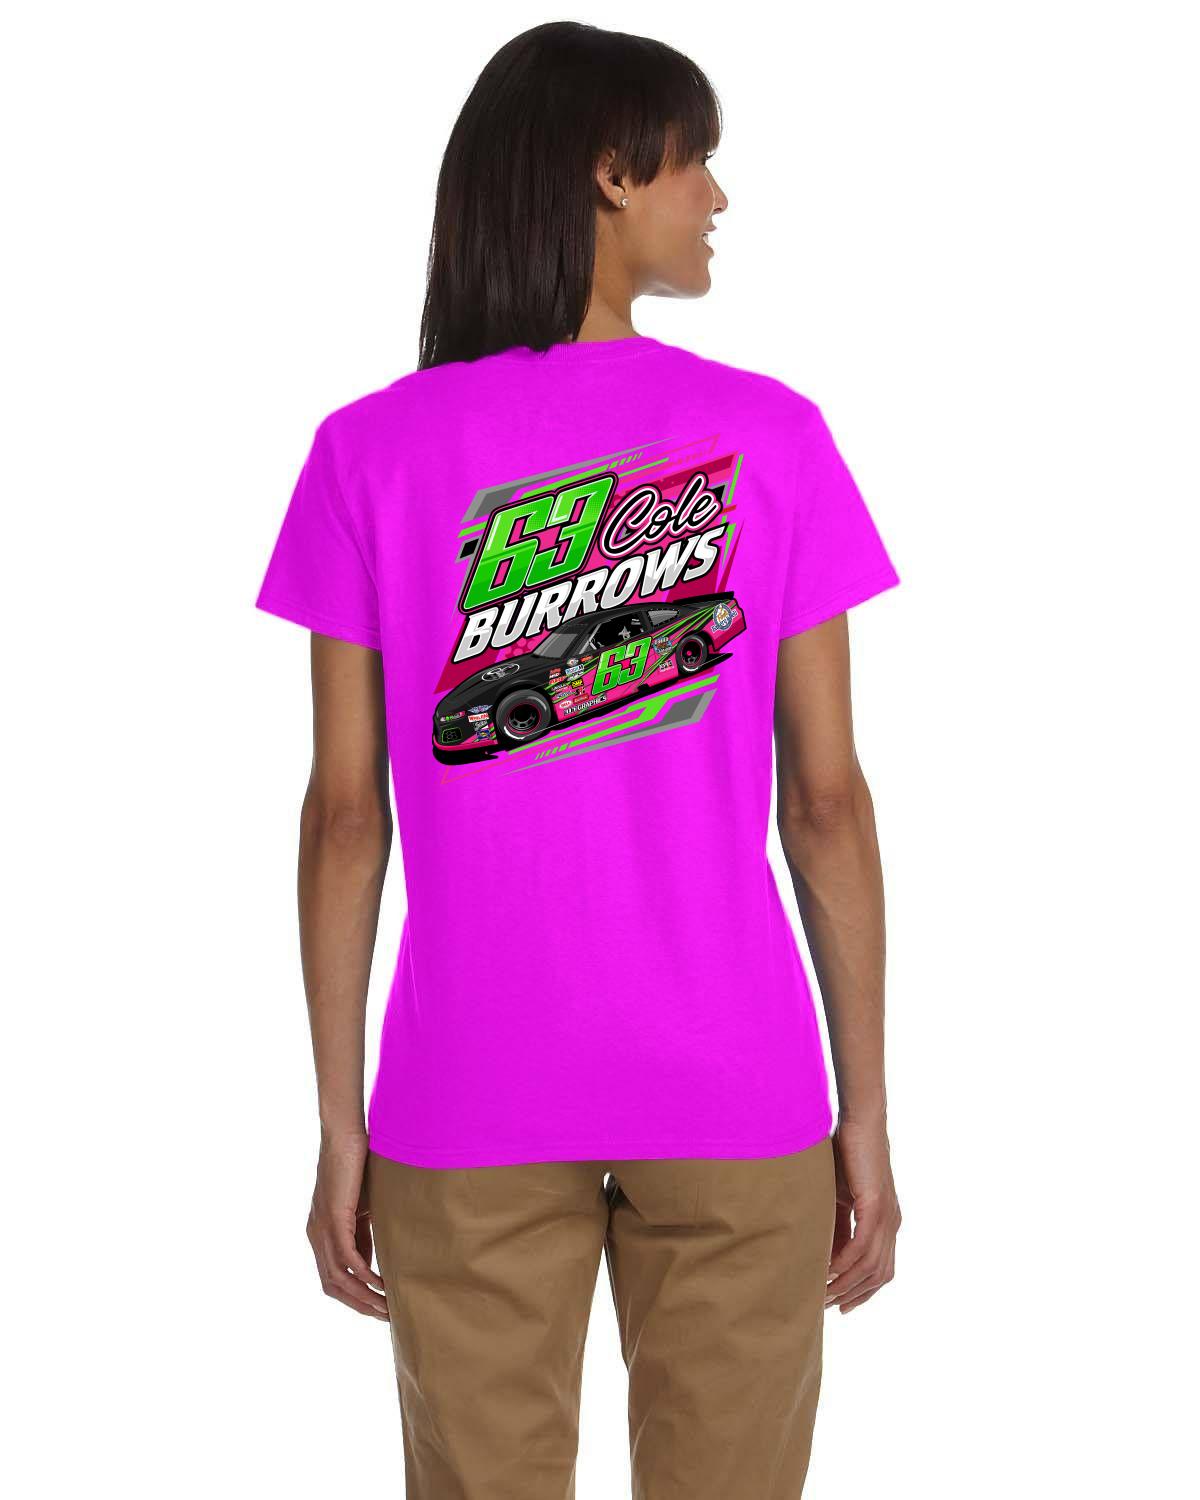 Cole Burrows Racing Ladies' T-Shirt